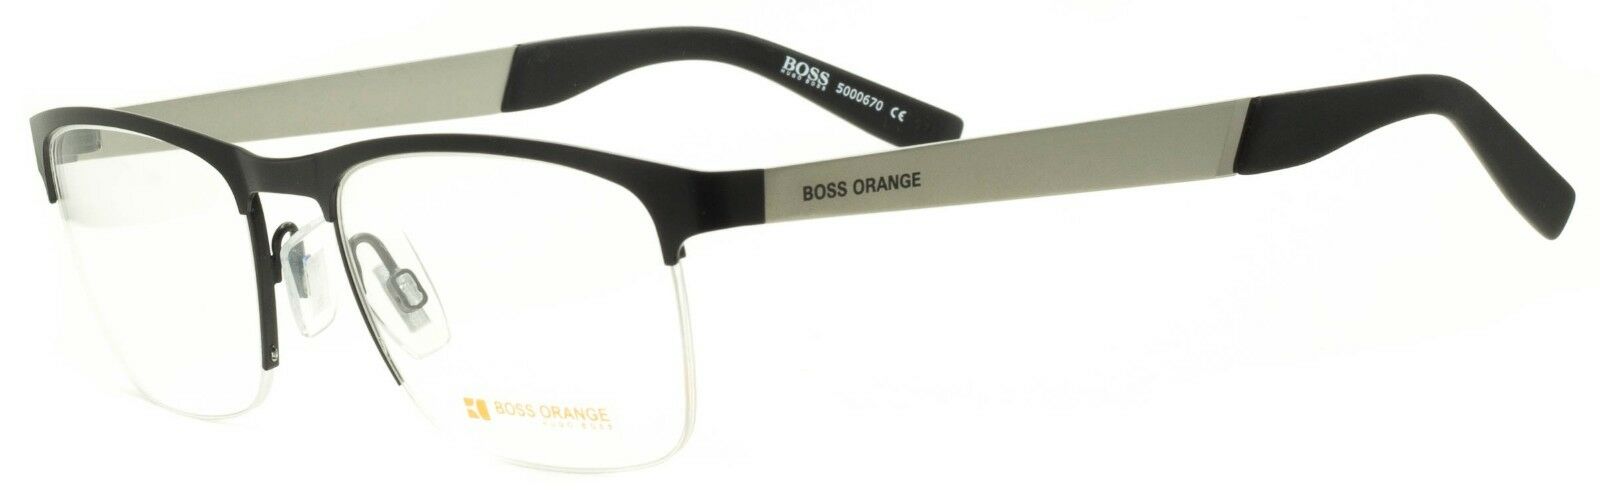 BOSS ORANGE BO 0227 30403826 53mm Eyewear FRAMES RX Optical Glasses Eyeglasses GGV Eyewear